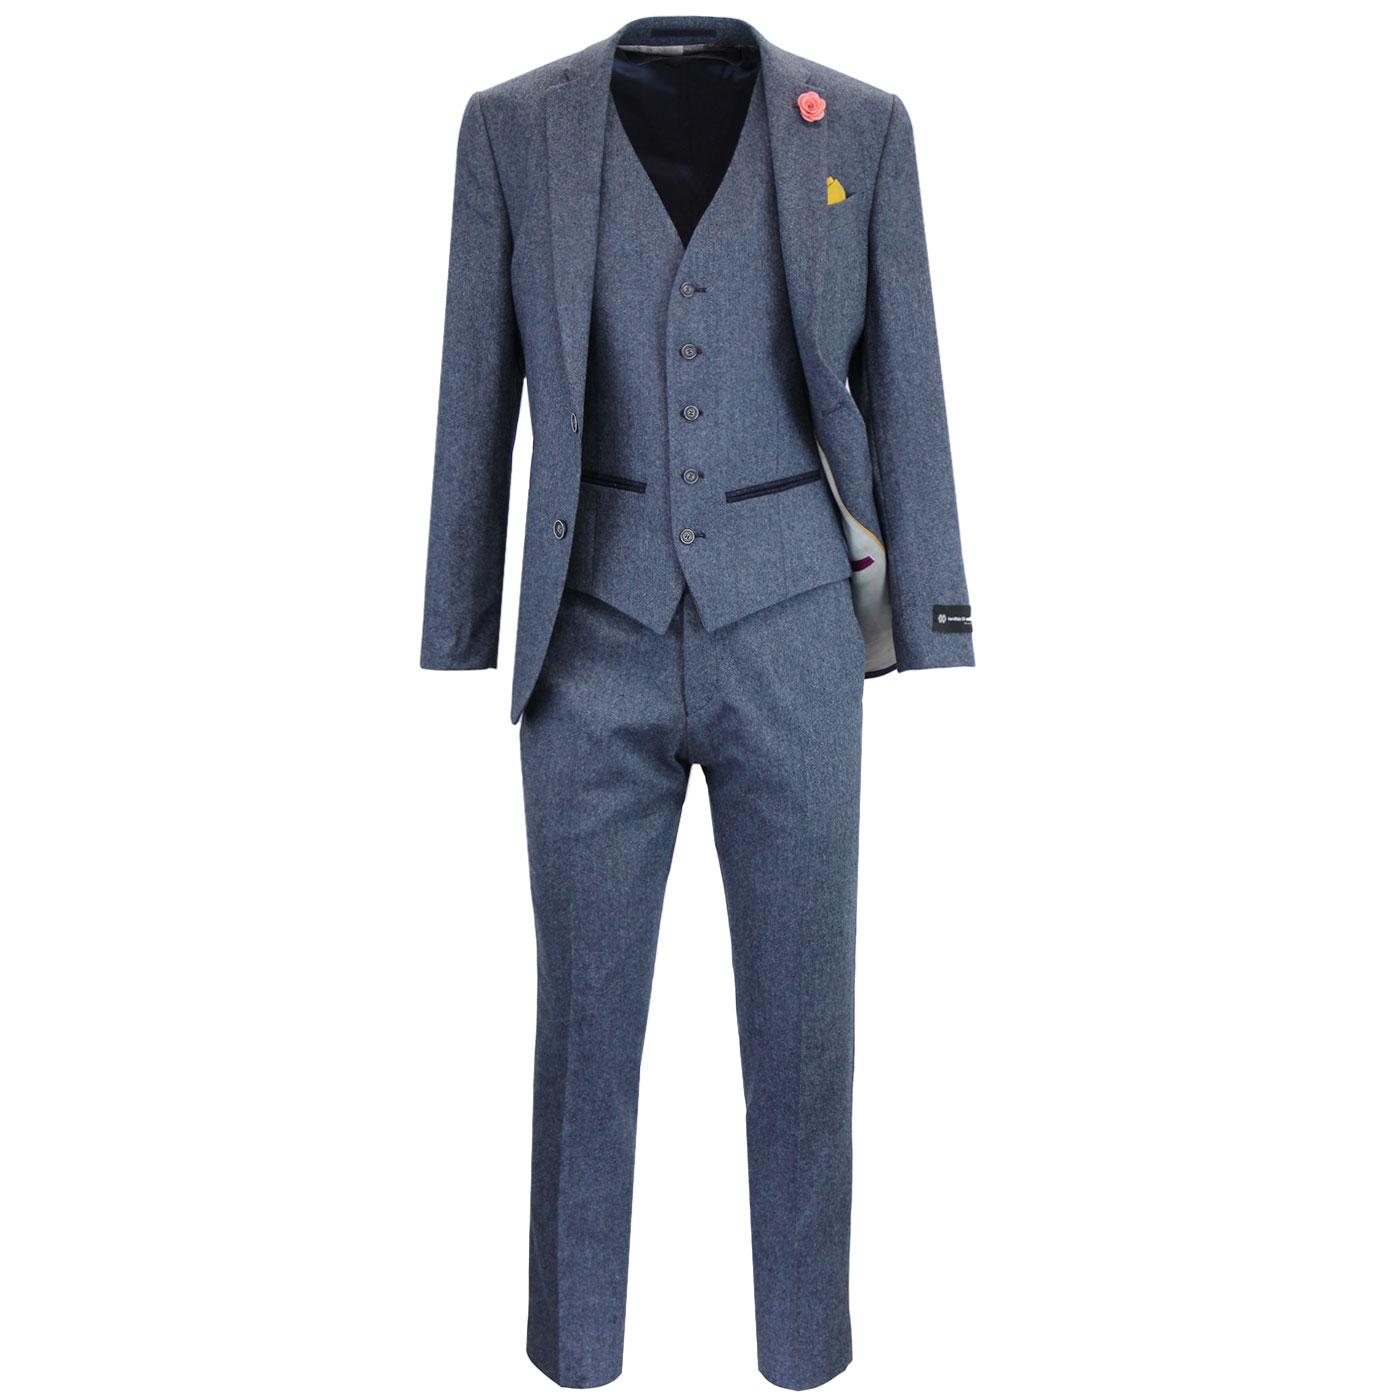 Madcap England Mod 60s Mens Dogtooth 3 piece Retro Suit in Black. | Retro  suits, Mod suits, 60's fashion